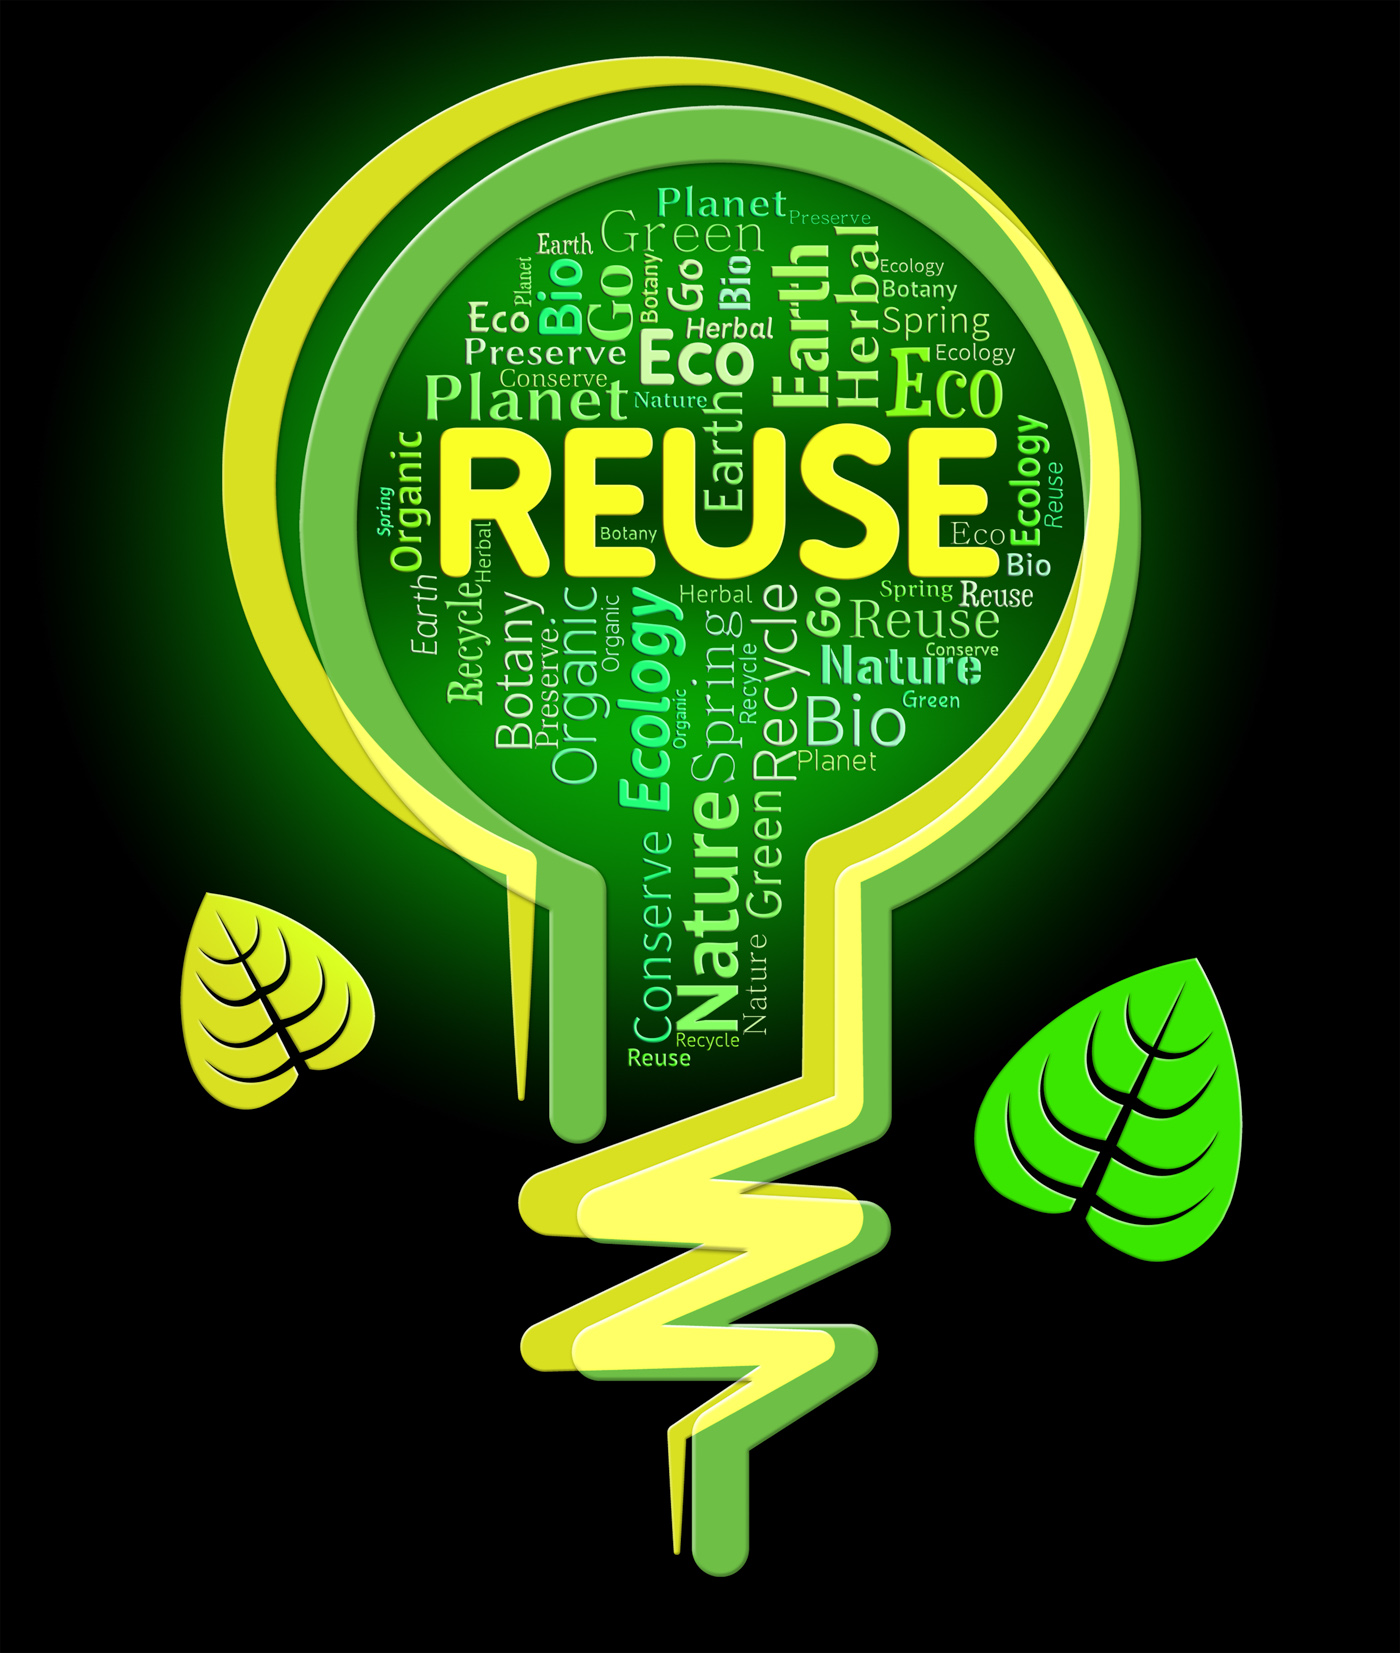 Reuse lightbulb represents go green and eco photo